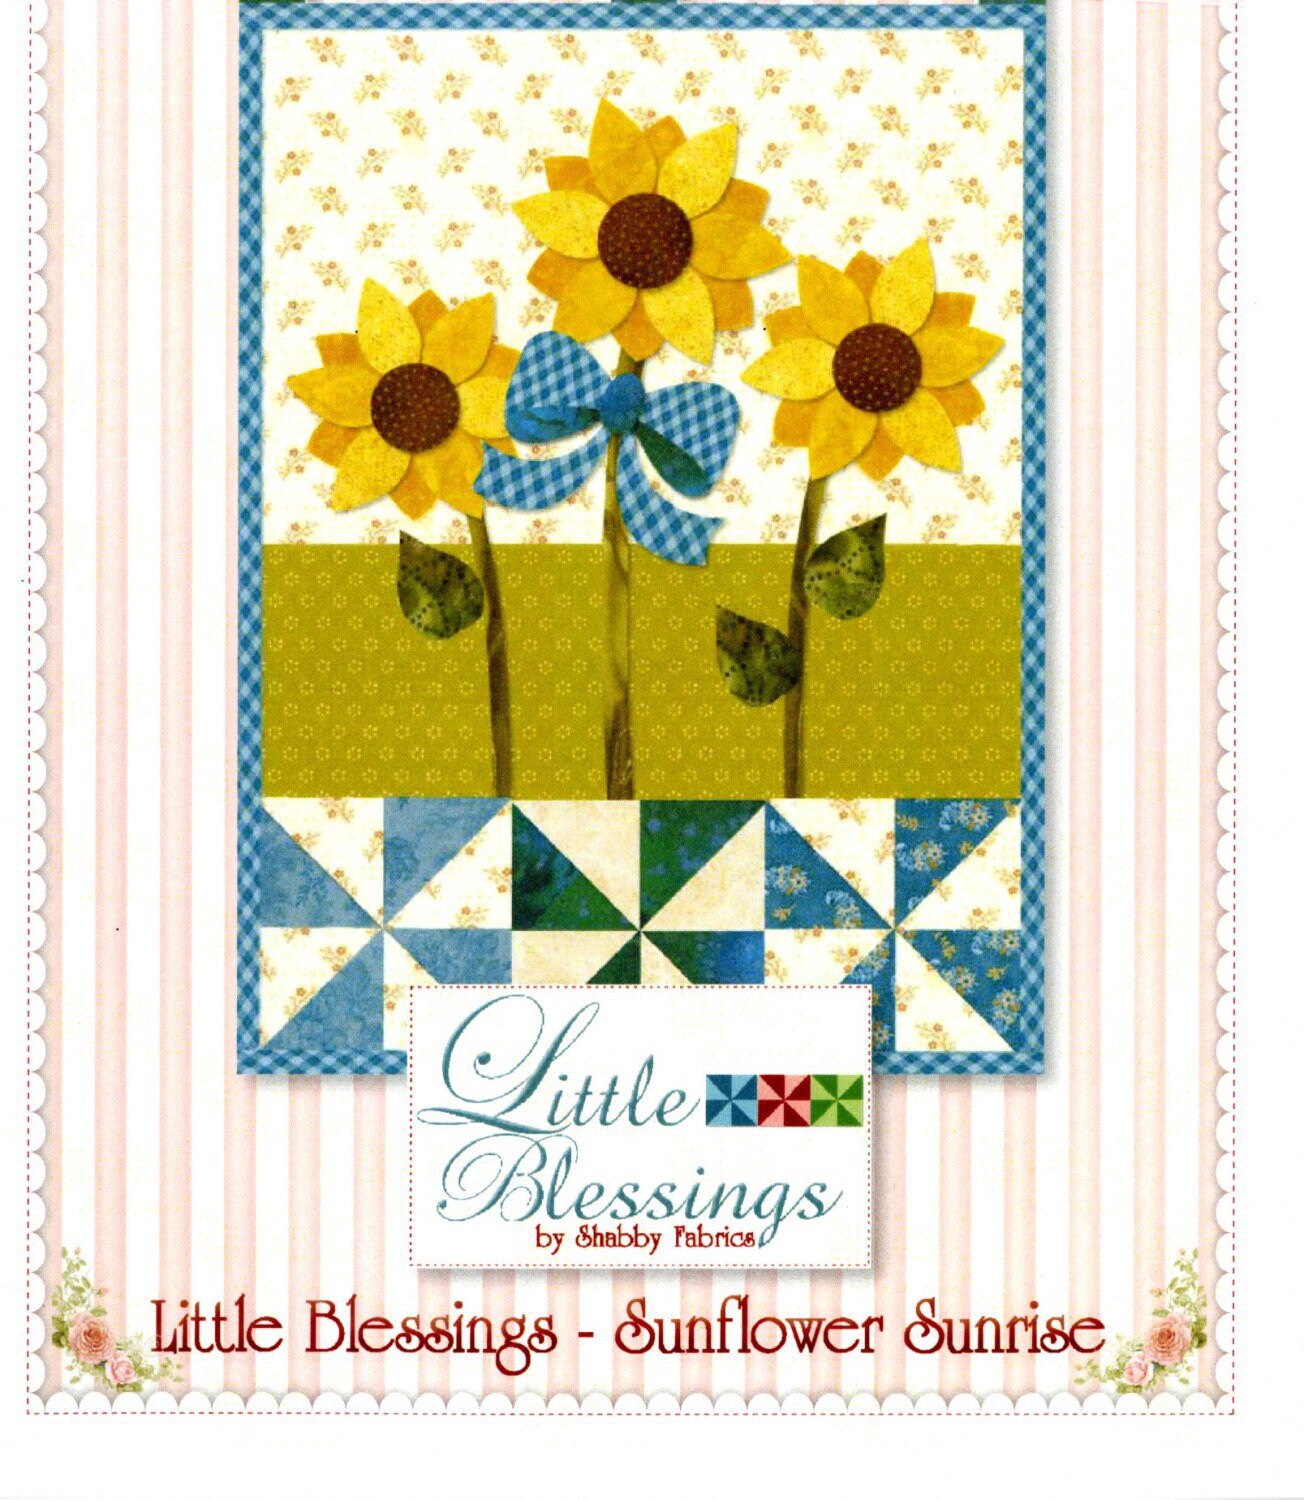 Little Blessings Sunflower Sunrise Pattern - Shabby Fabrics - Jennifer Bosworth - Mini Quilt Pattern - Wall Hanging Pattern